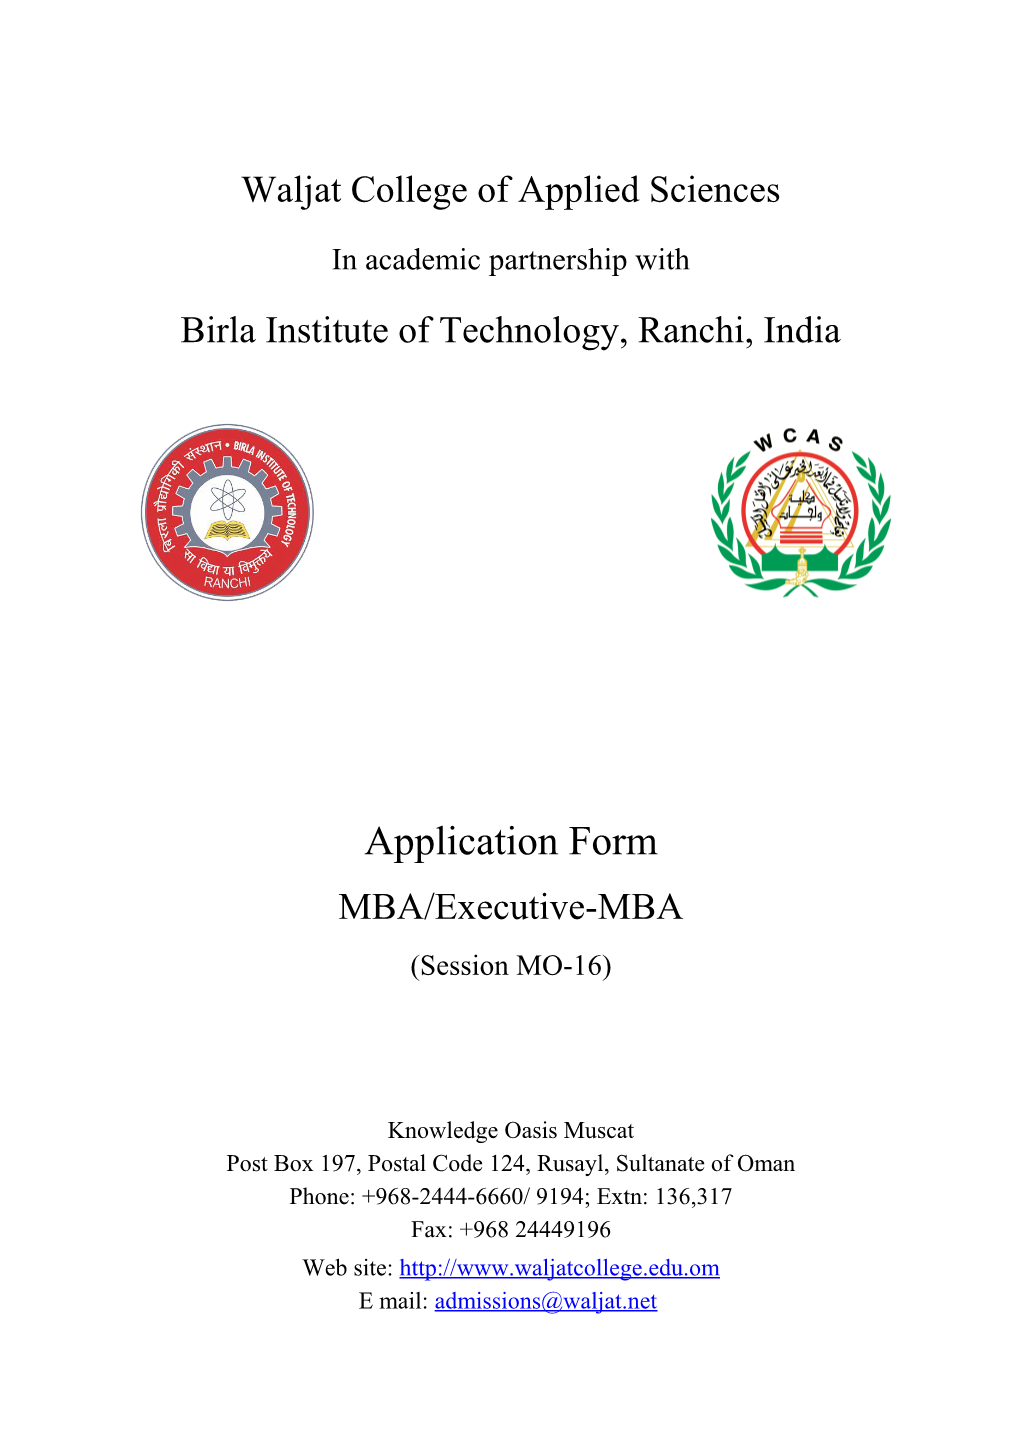 Birla Institute of Technology, Ranchi, India